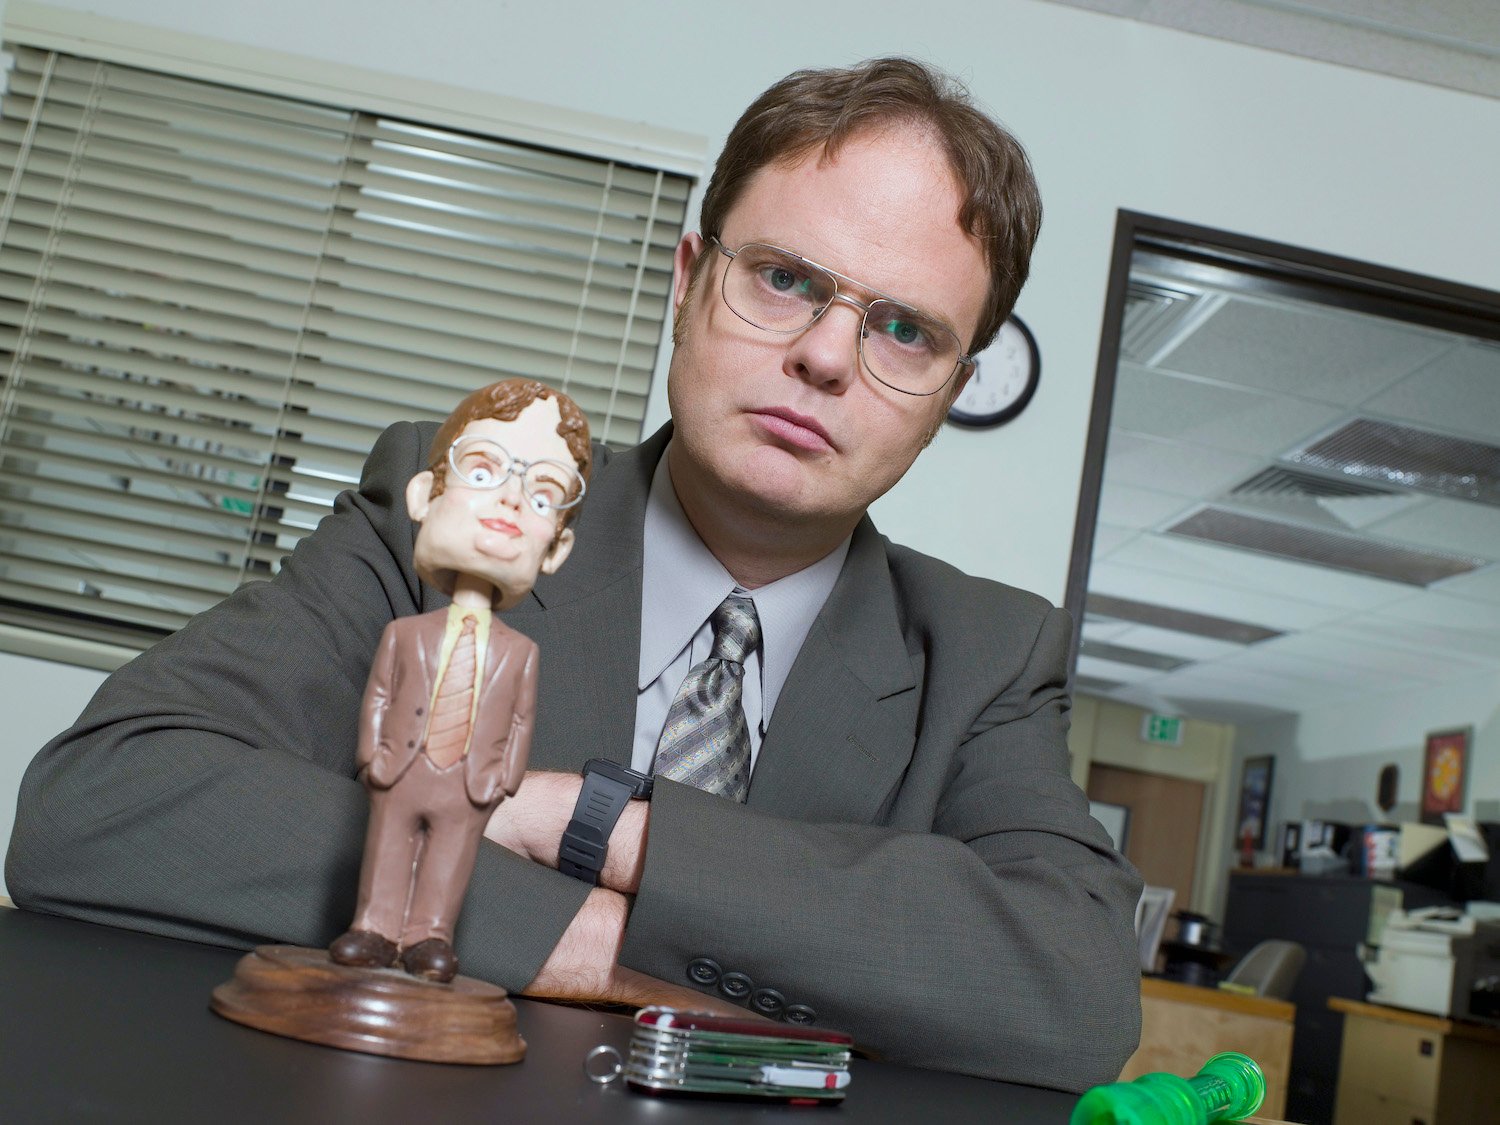 The Office star Rainn Wilson as character Dwight Schrute sitting behind a bobblehead Dwight doll.